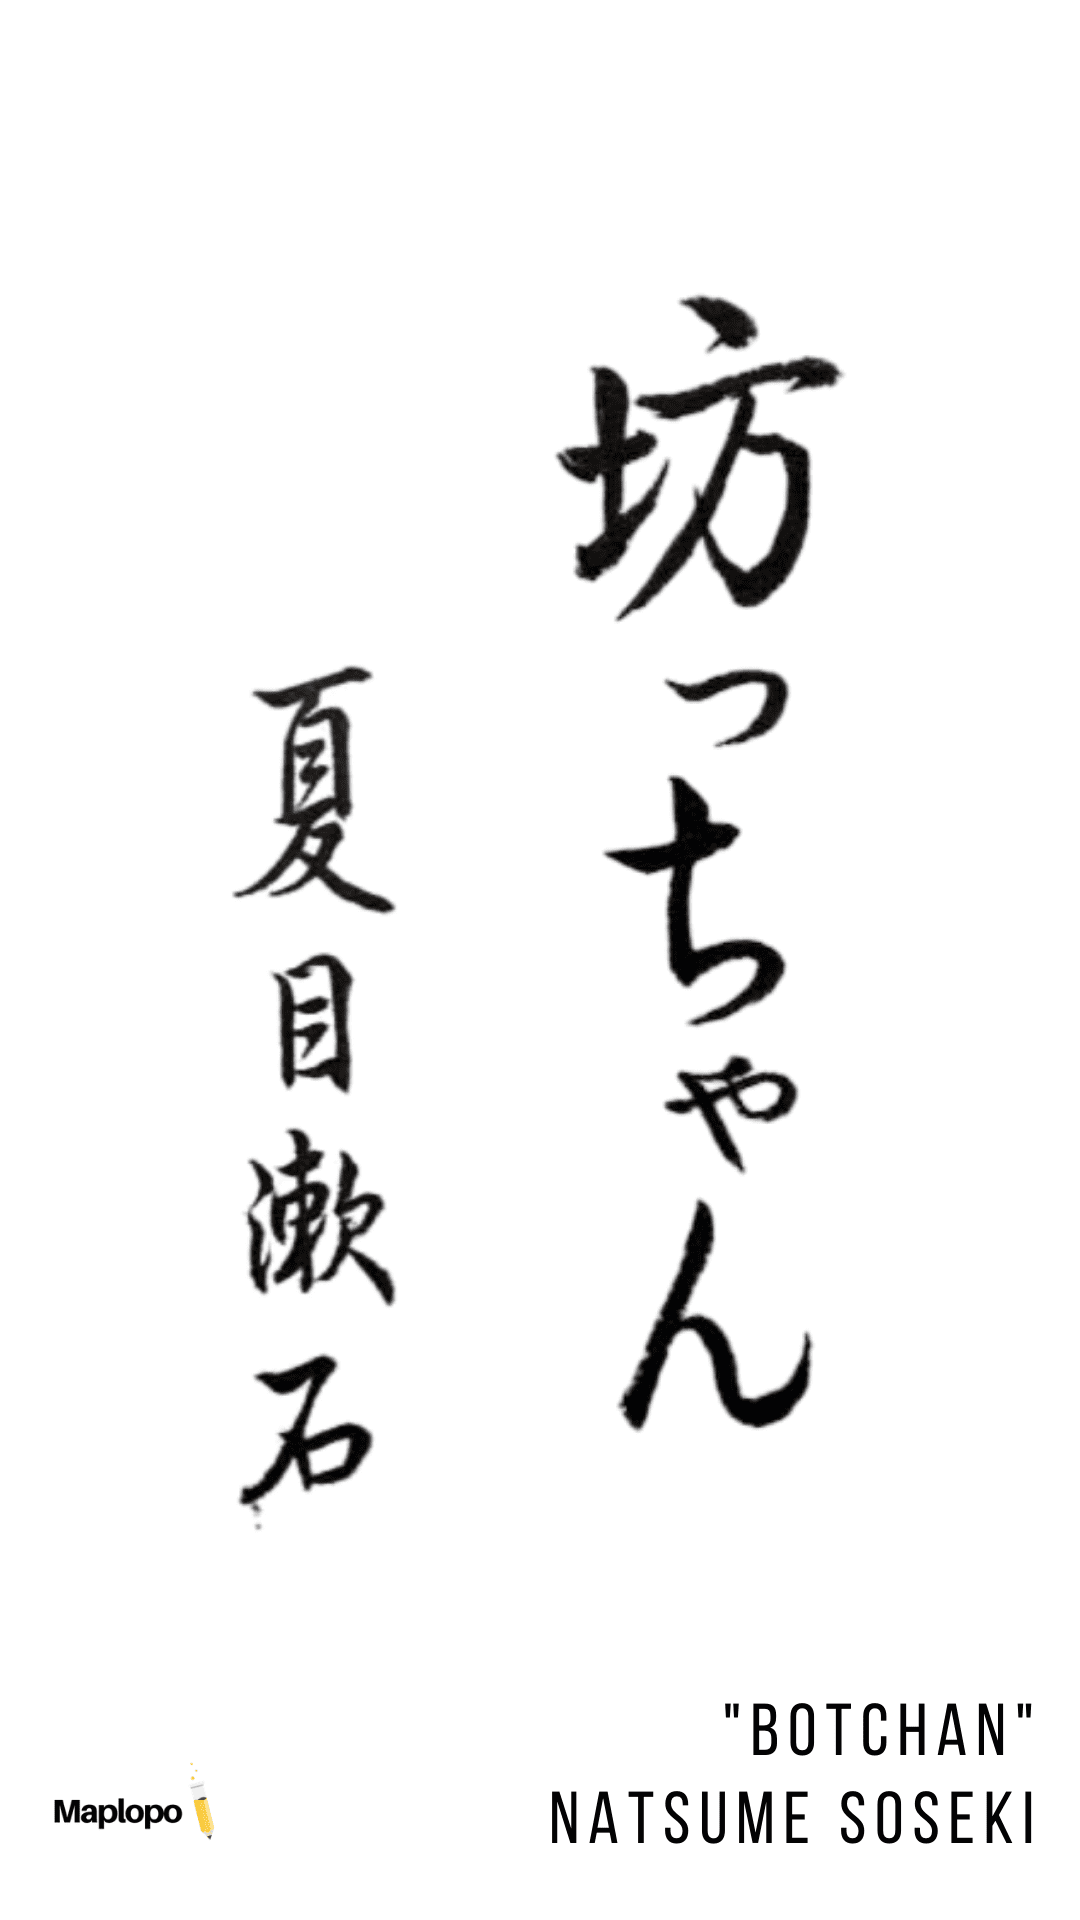 Natsume Soseki Botchan Calligraphy | Maplopo | Seri Ichiei